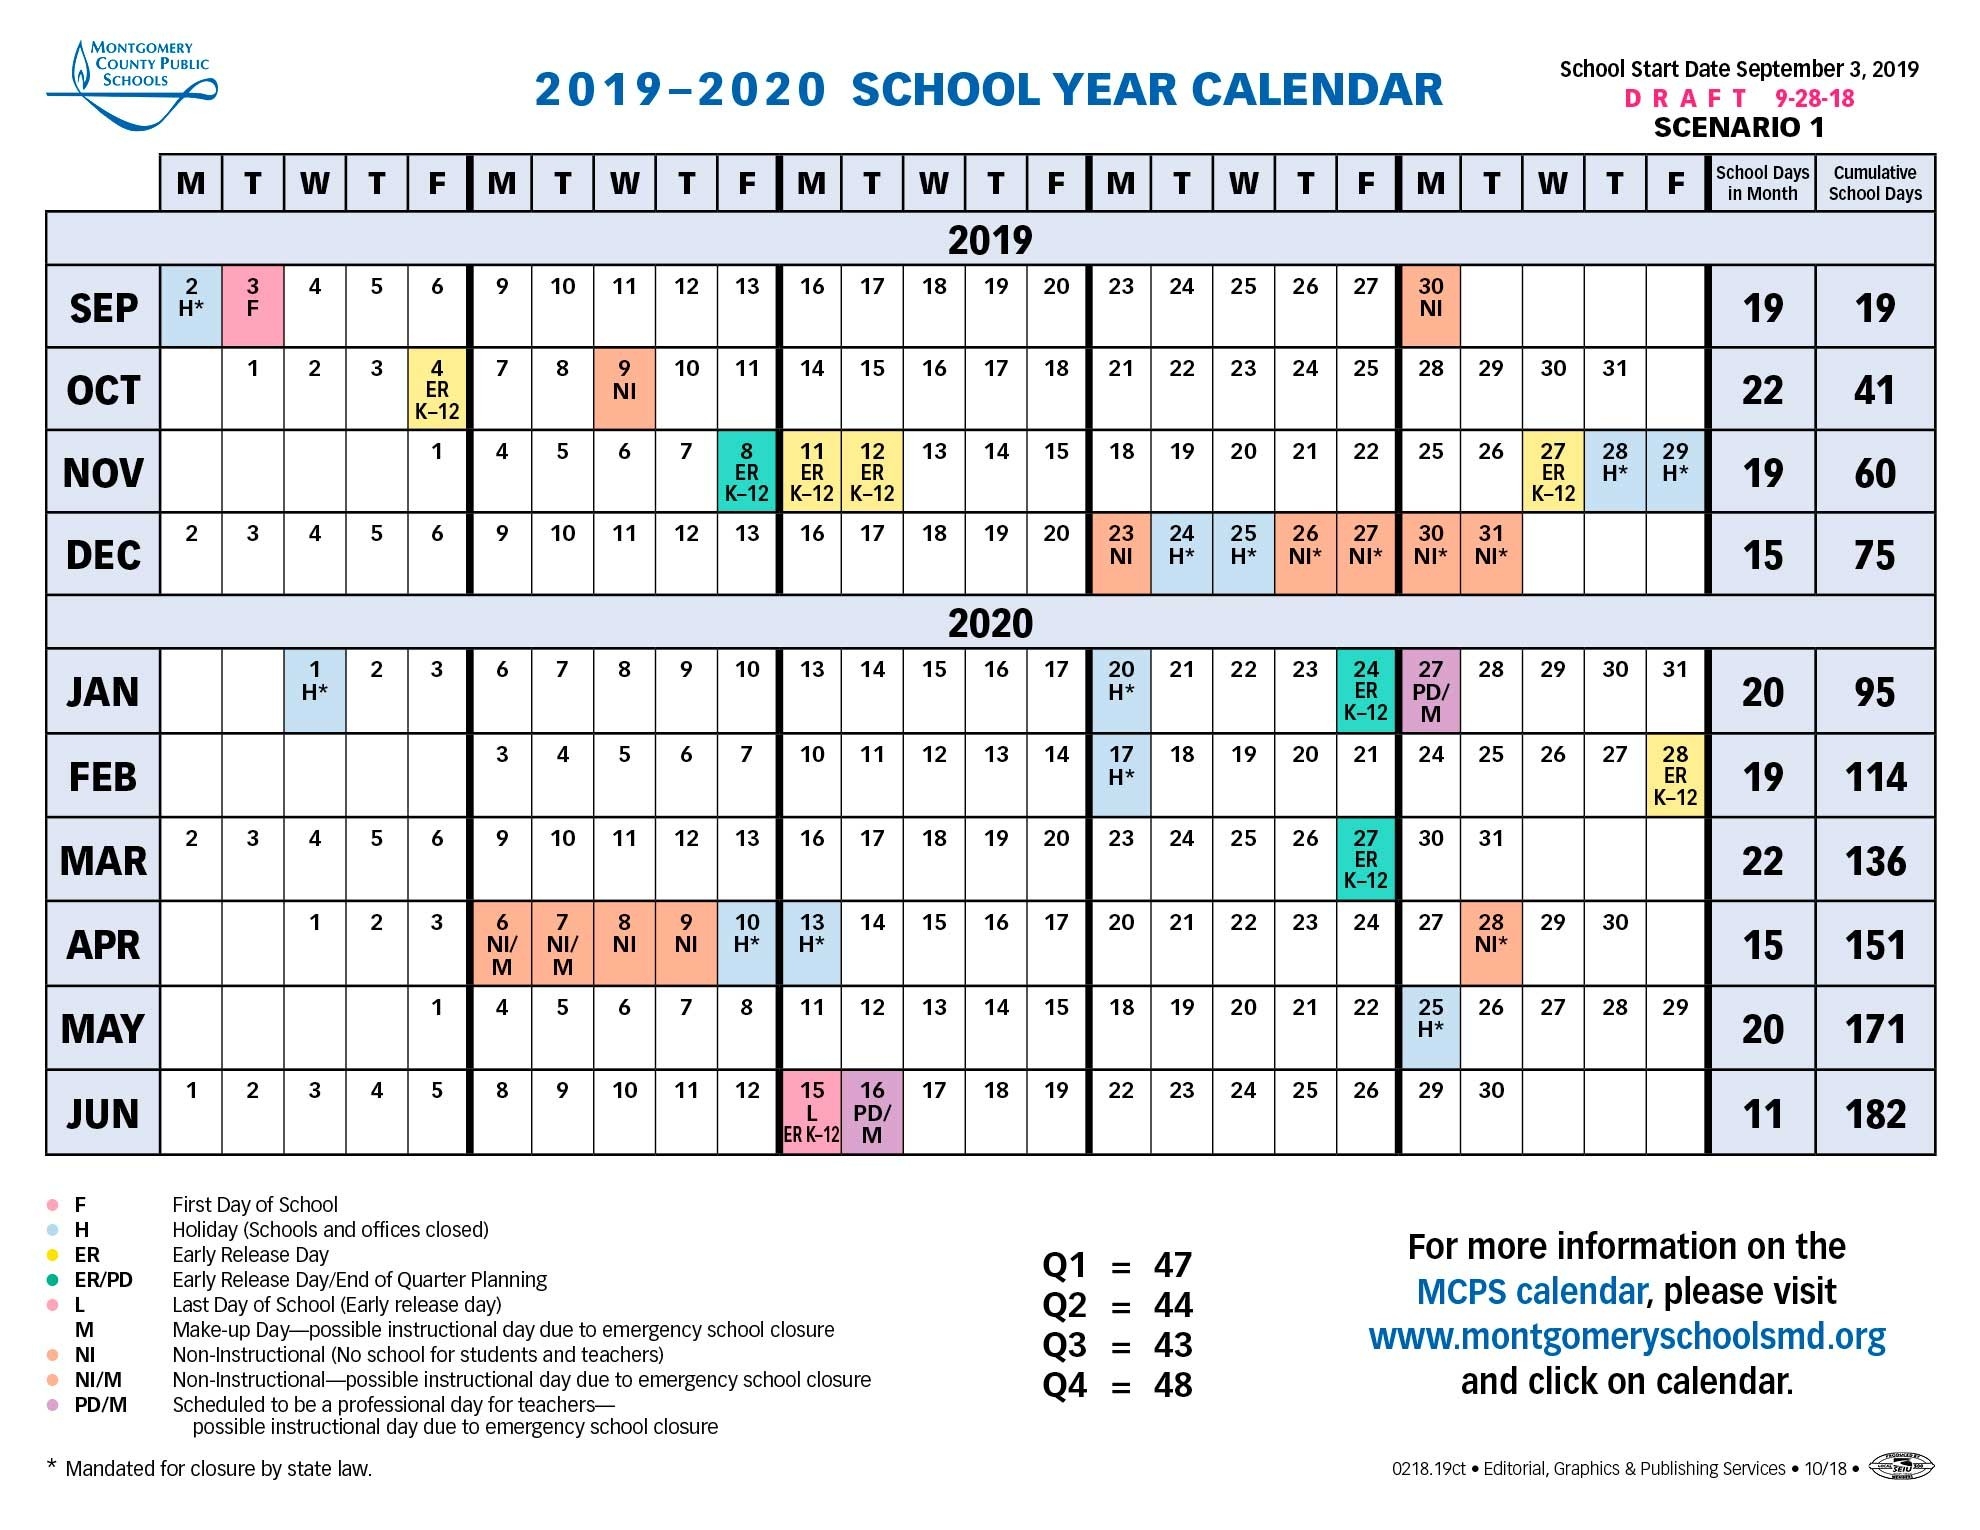 School Board Approves Longer Spring Break For 2019-2020-Jewish Calendar For Holidays 2020